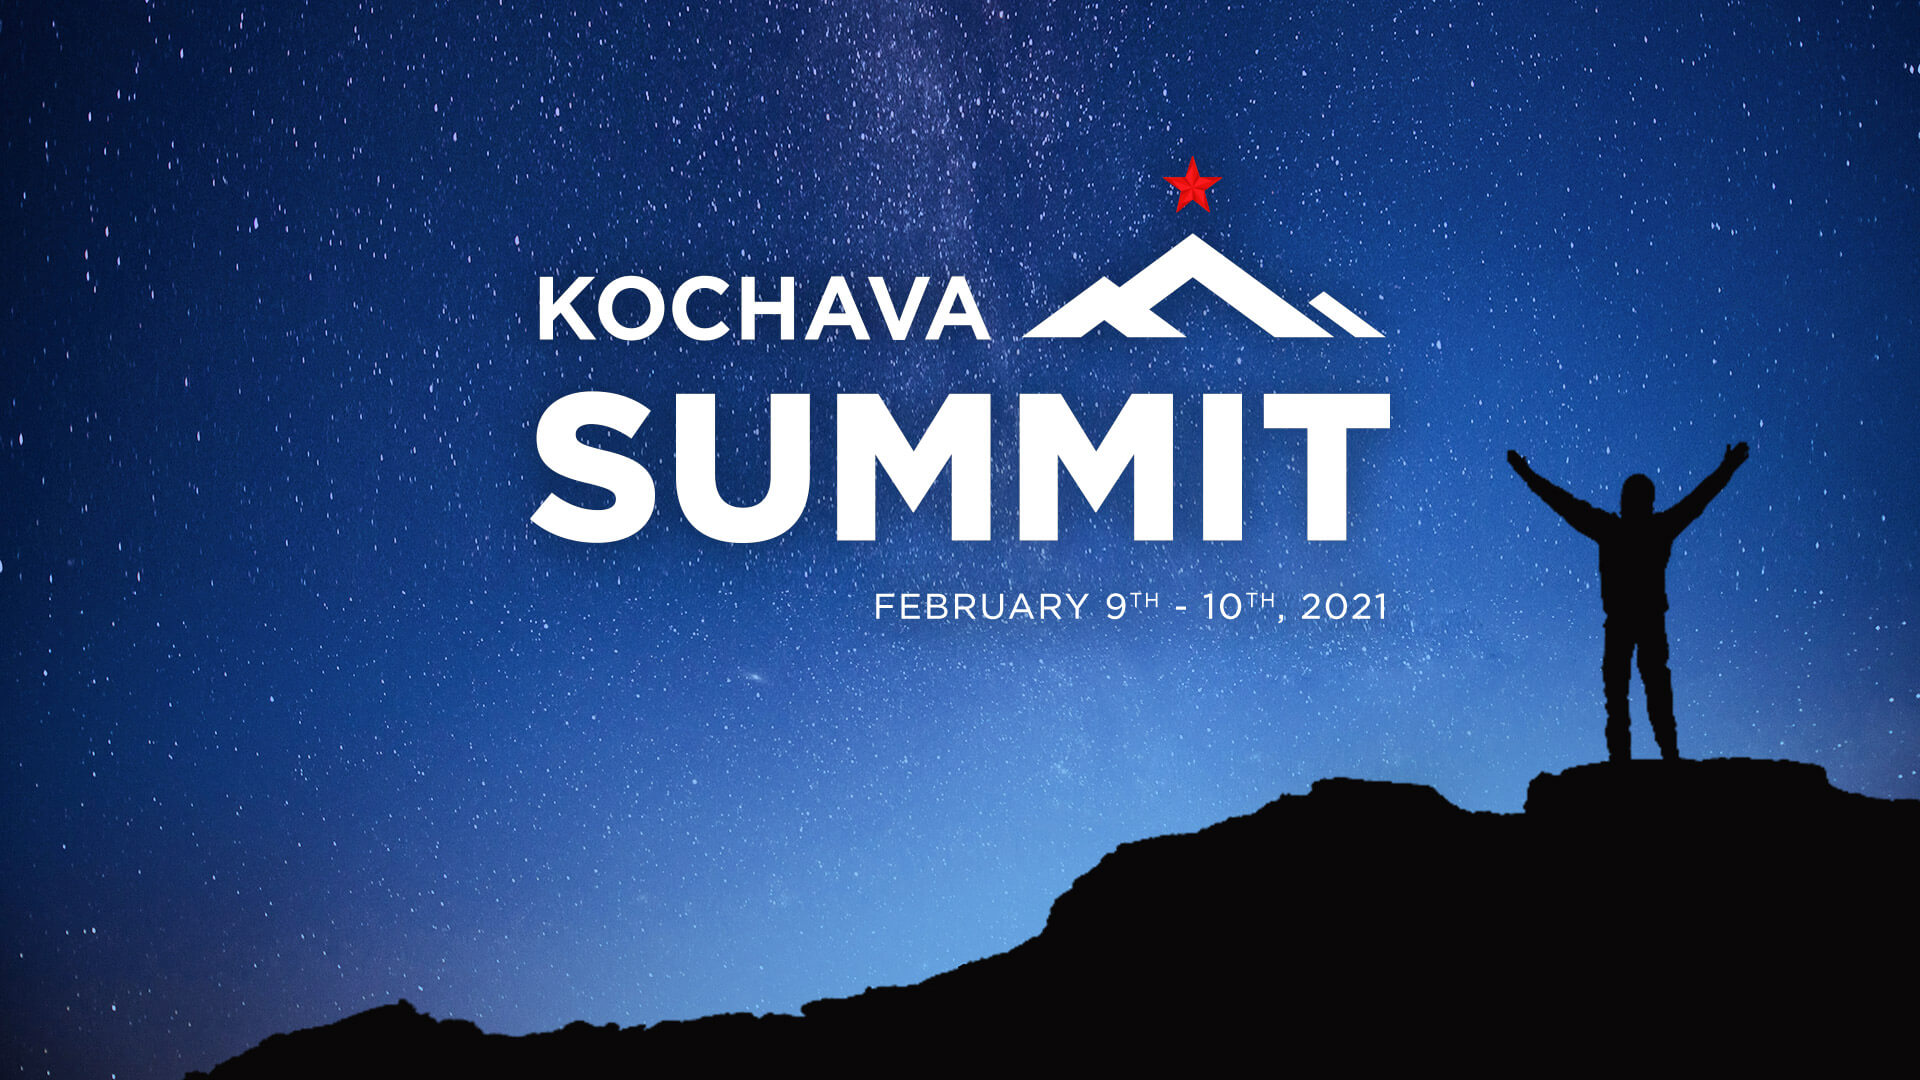 Kochava Summit AdTech Conference